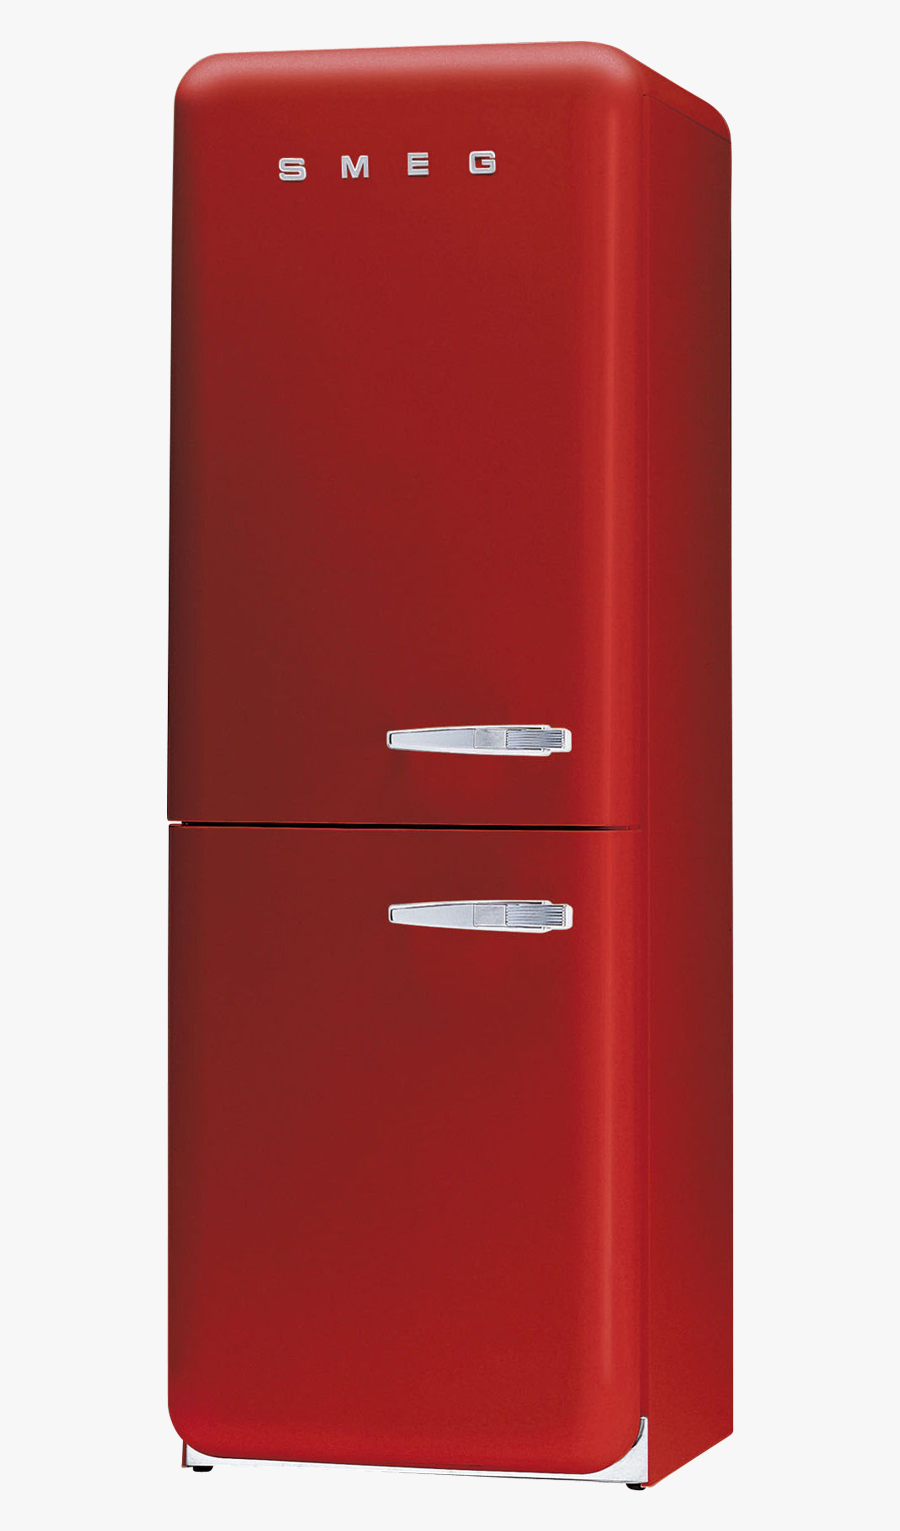 Refrigerator Png Image - Refrigerator, Transparent Clipart